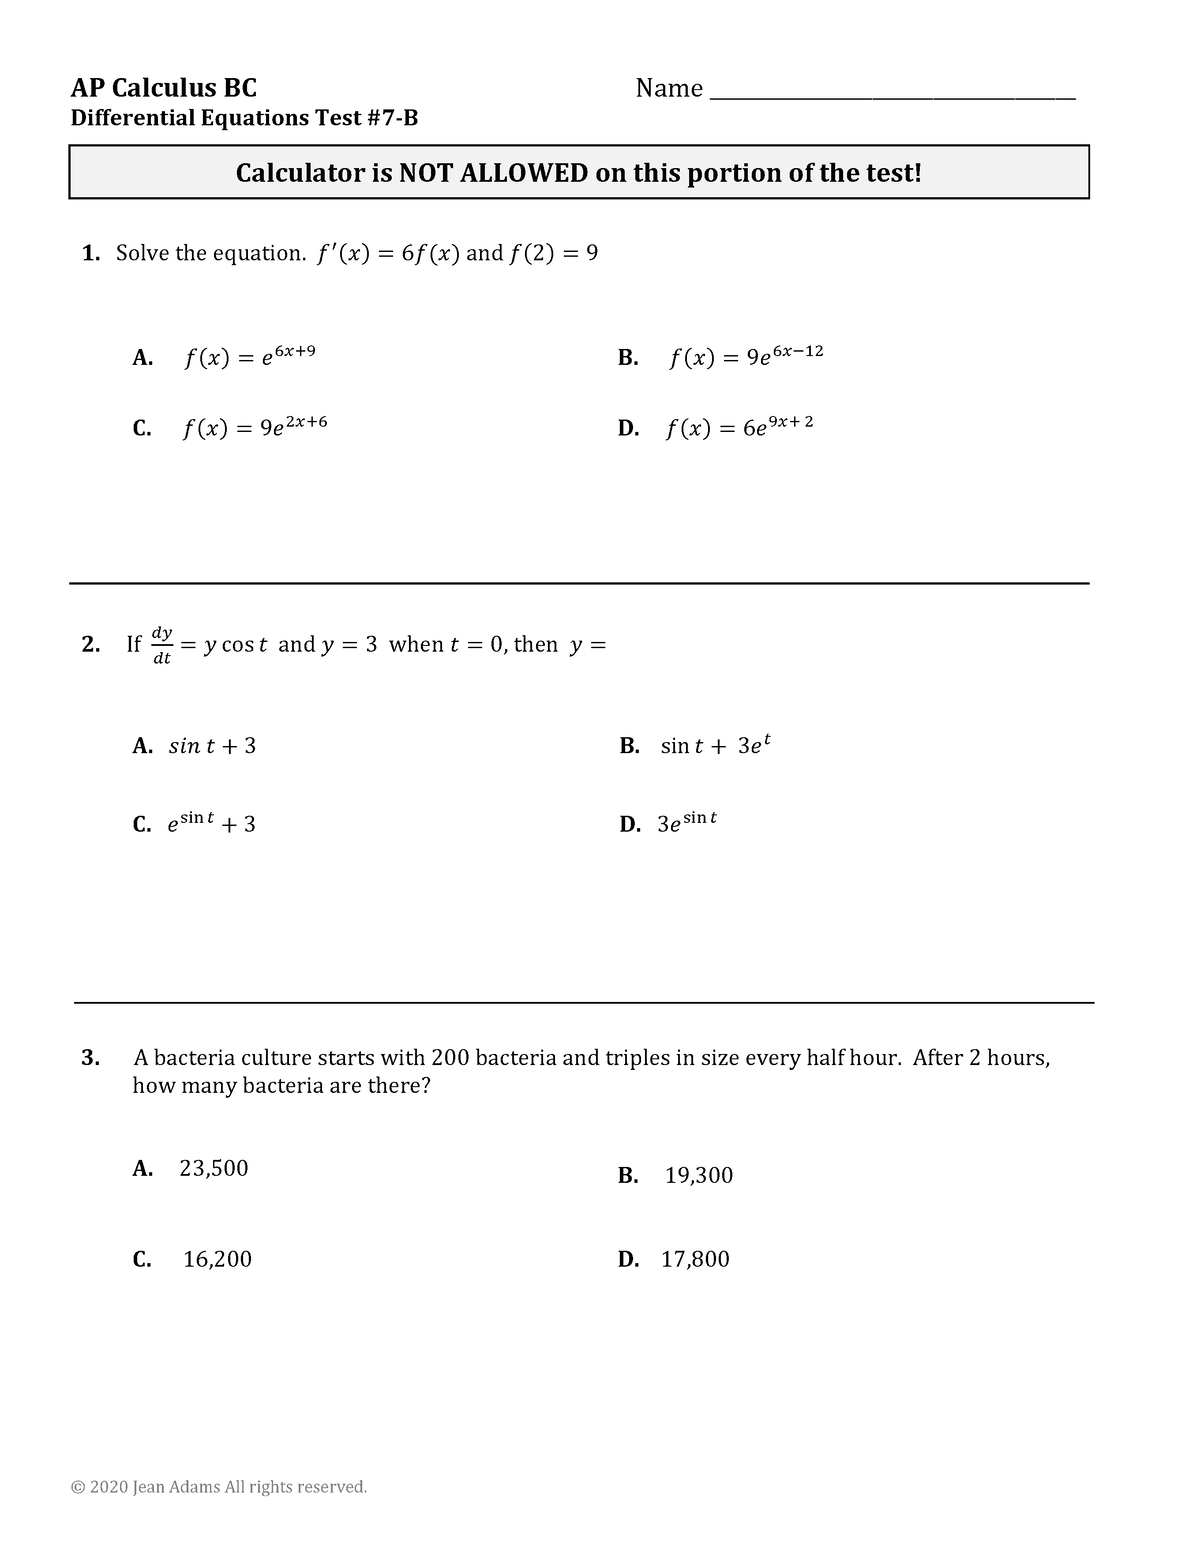 Unit 7 BC AP Test 7B Test similar to ap calculus bc questions. Covers